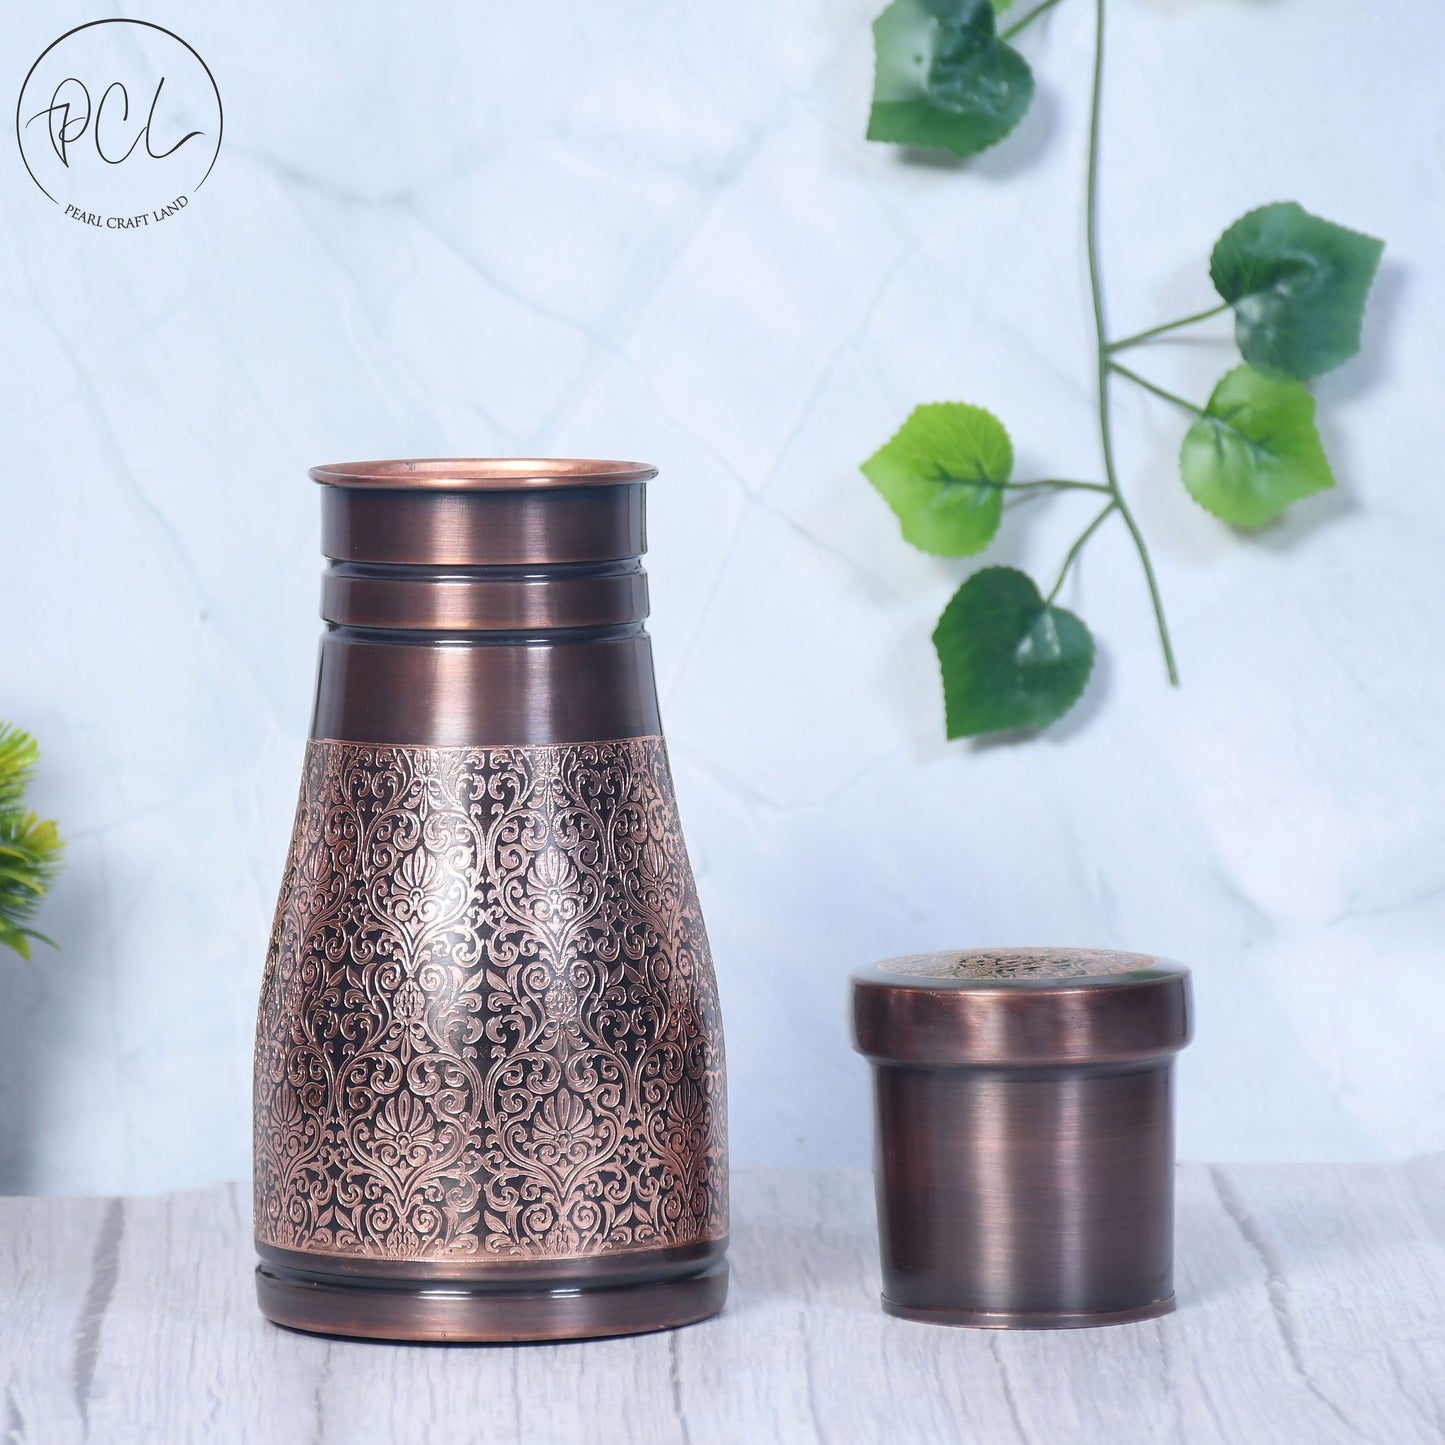 Pure Copper Bedside Jar with Antiqued Black Engraving Inbuilt Glass Capacity 1000ML